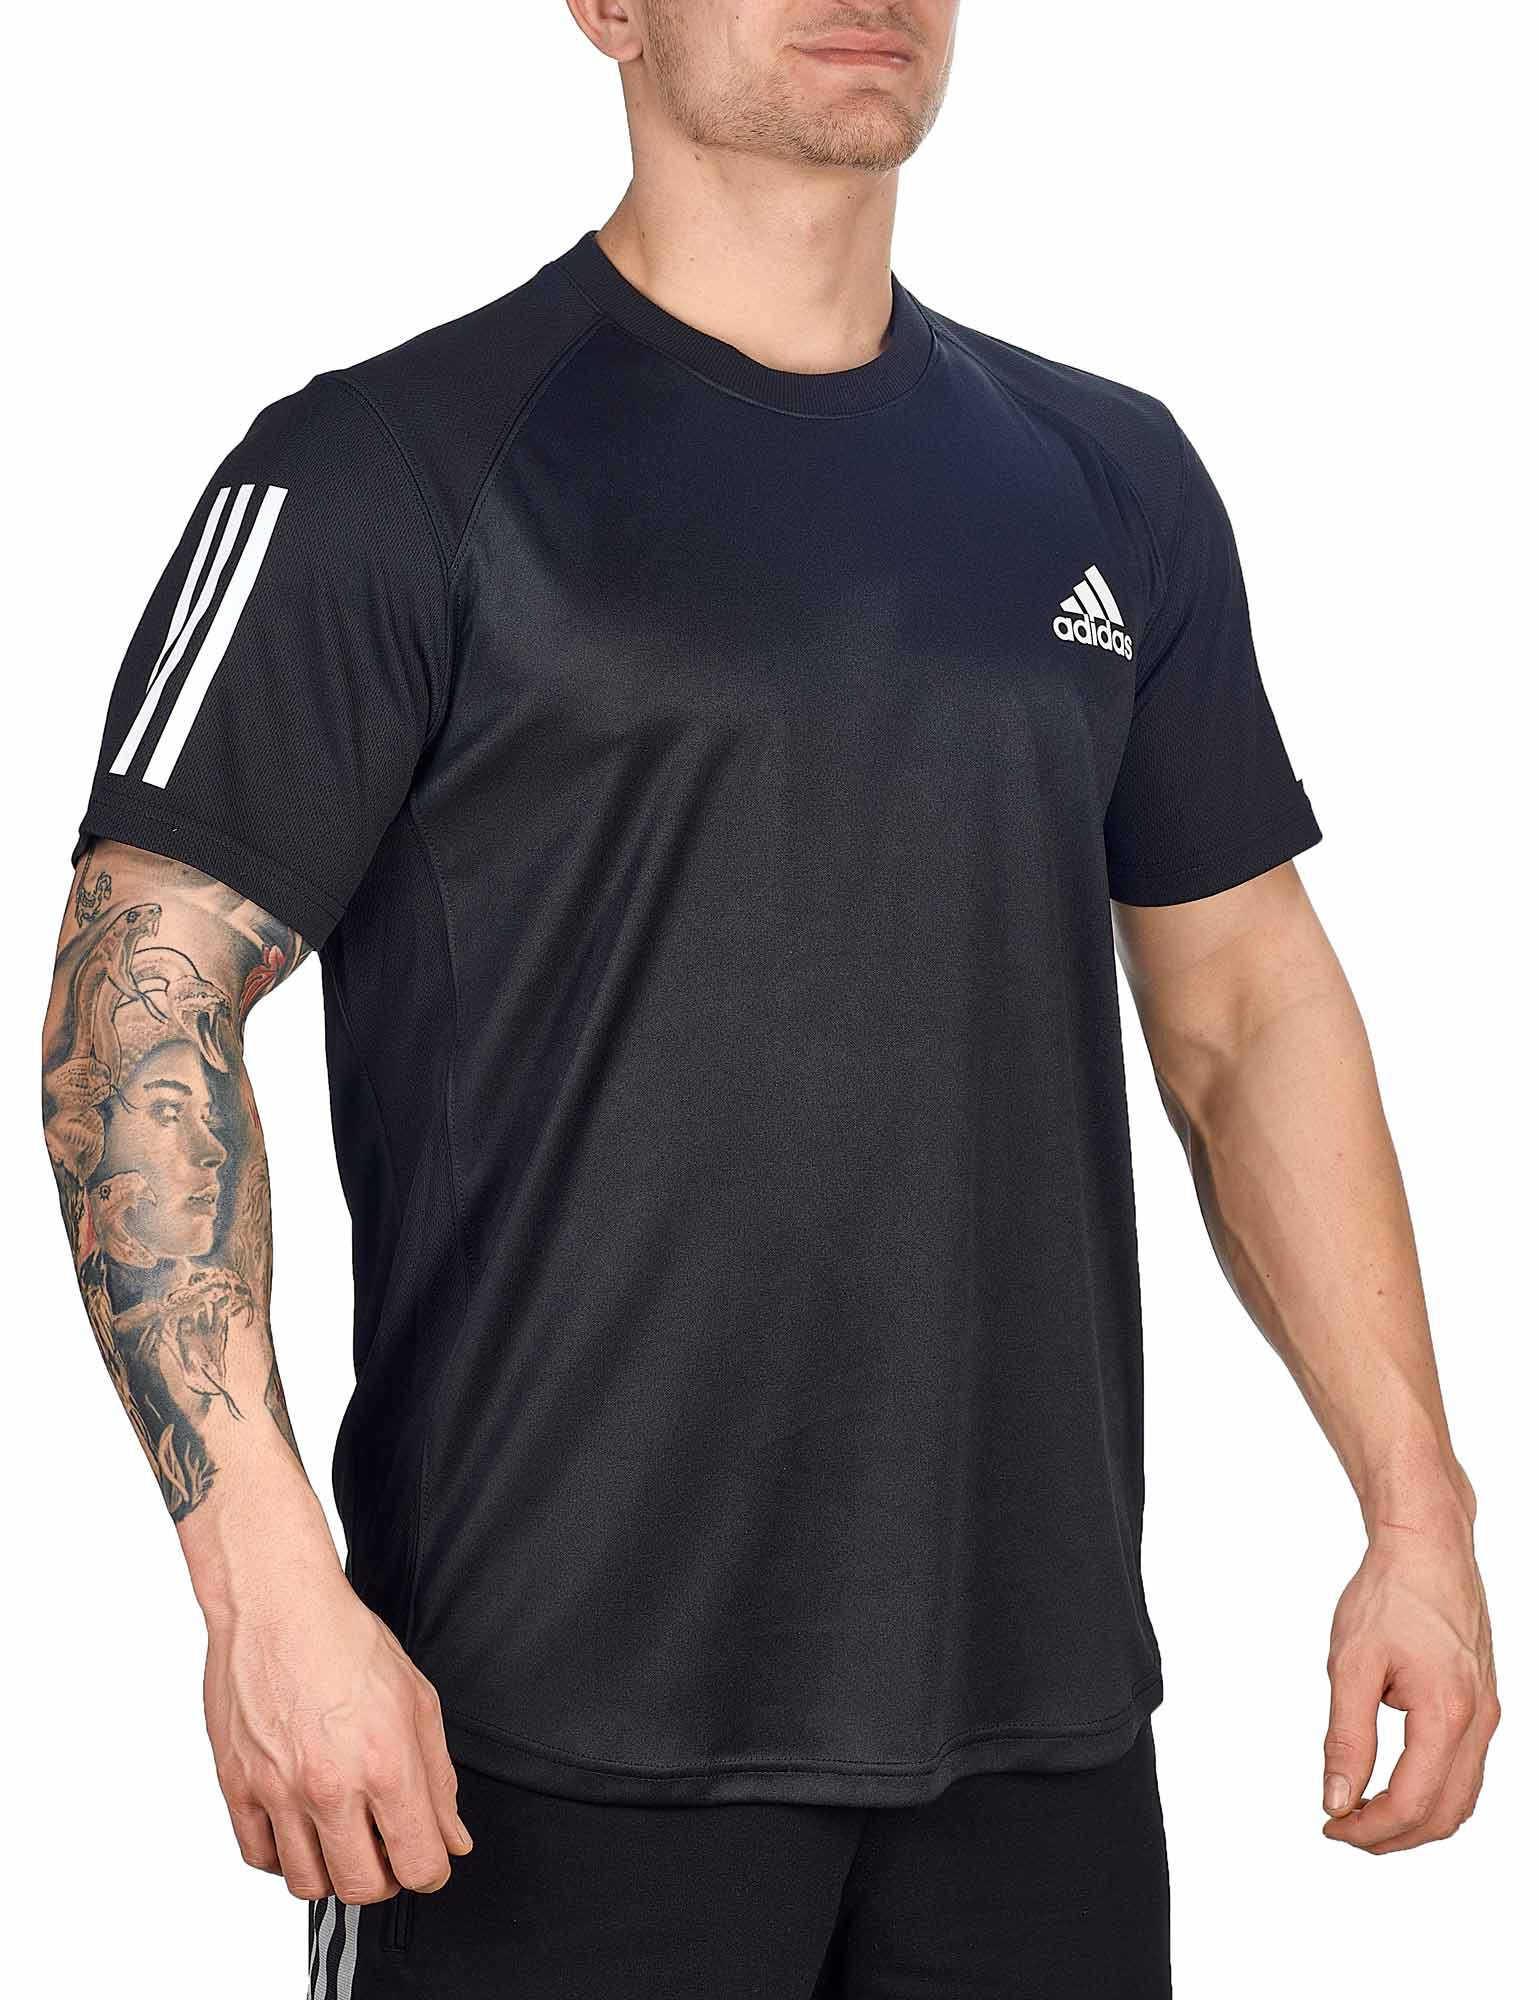 adidas Boxing Wear Tech T-Shirt, BXWTTS01